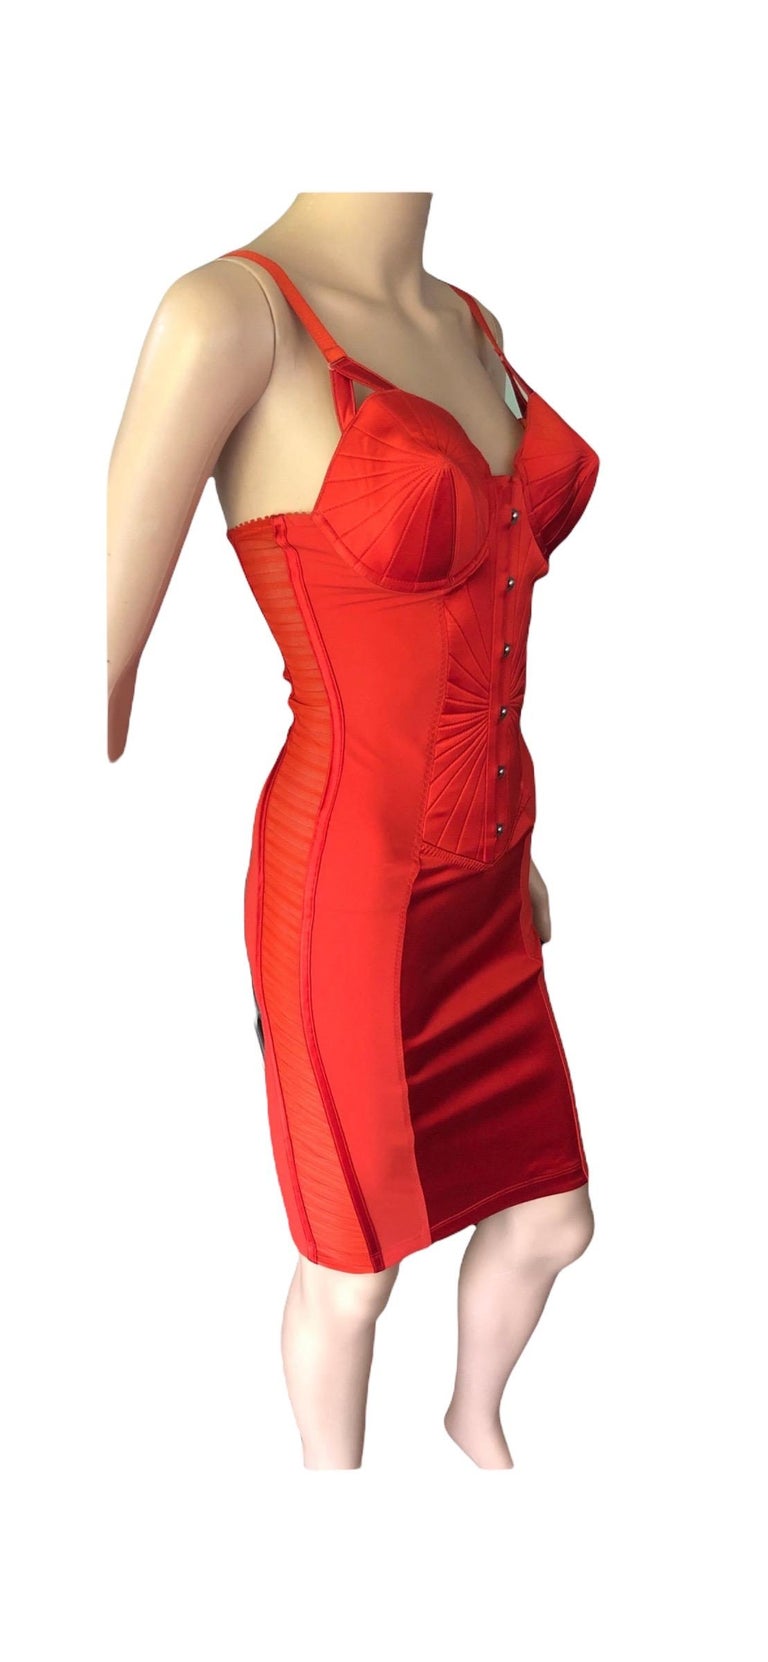 Jean Paul Gaultier for La Perla c. 2010 Cone Bra Corset Bondage Red Dress For Sale 13